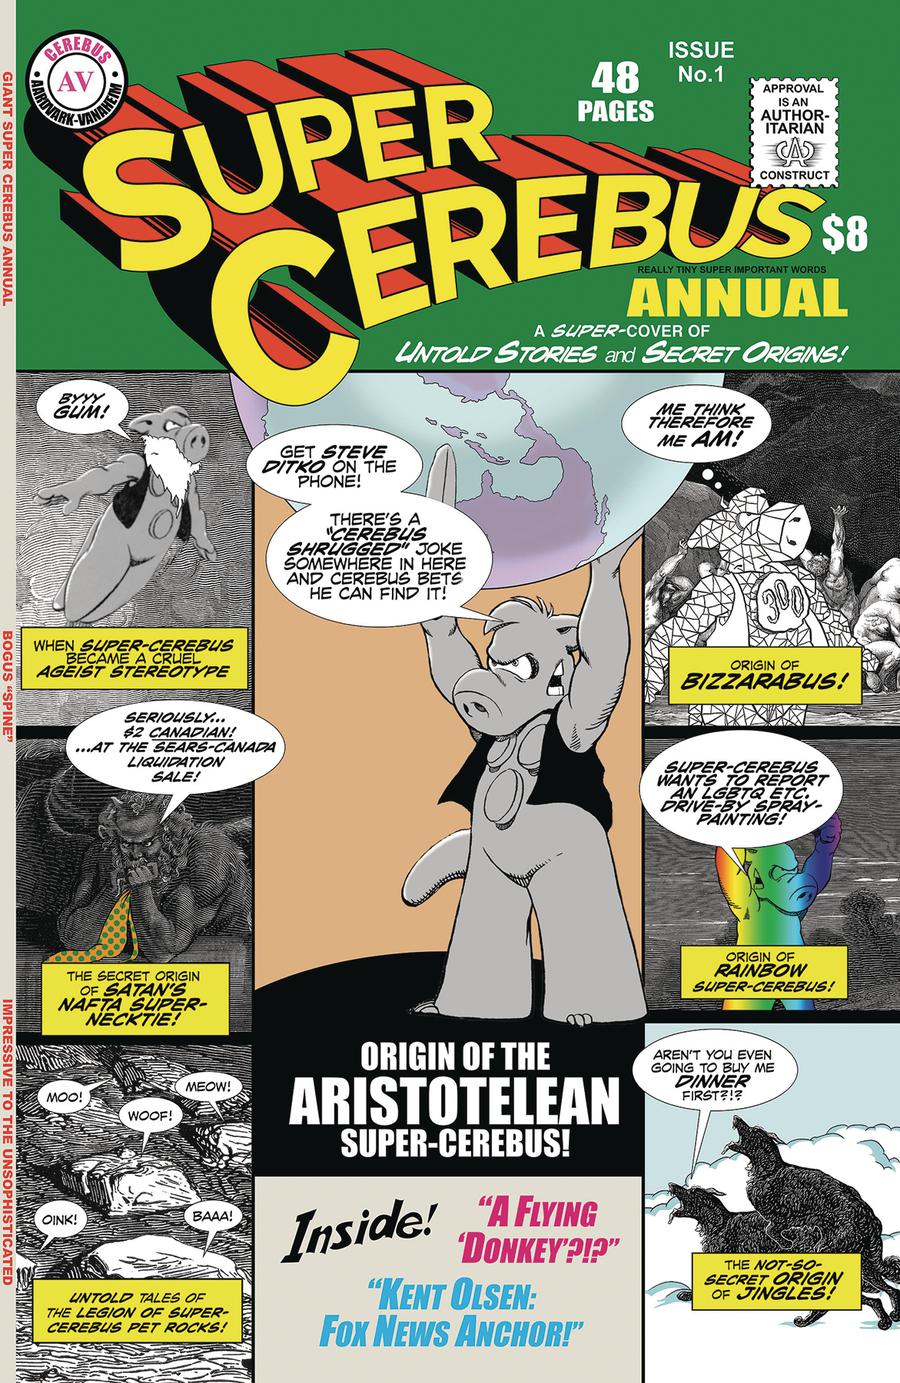 Giant Super-Cerebus Annual #1